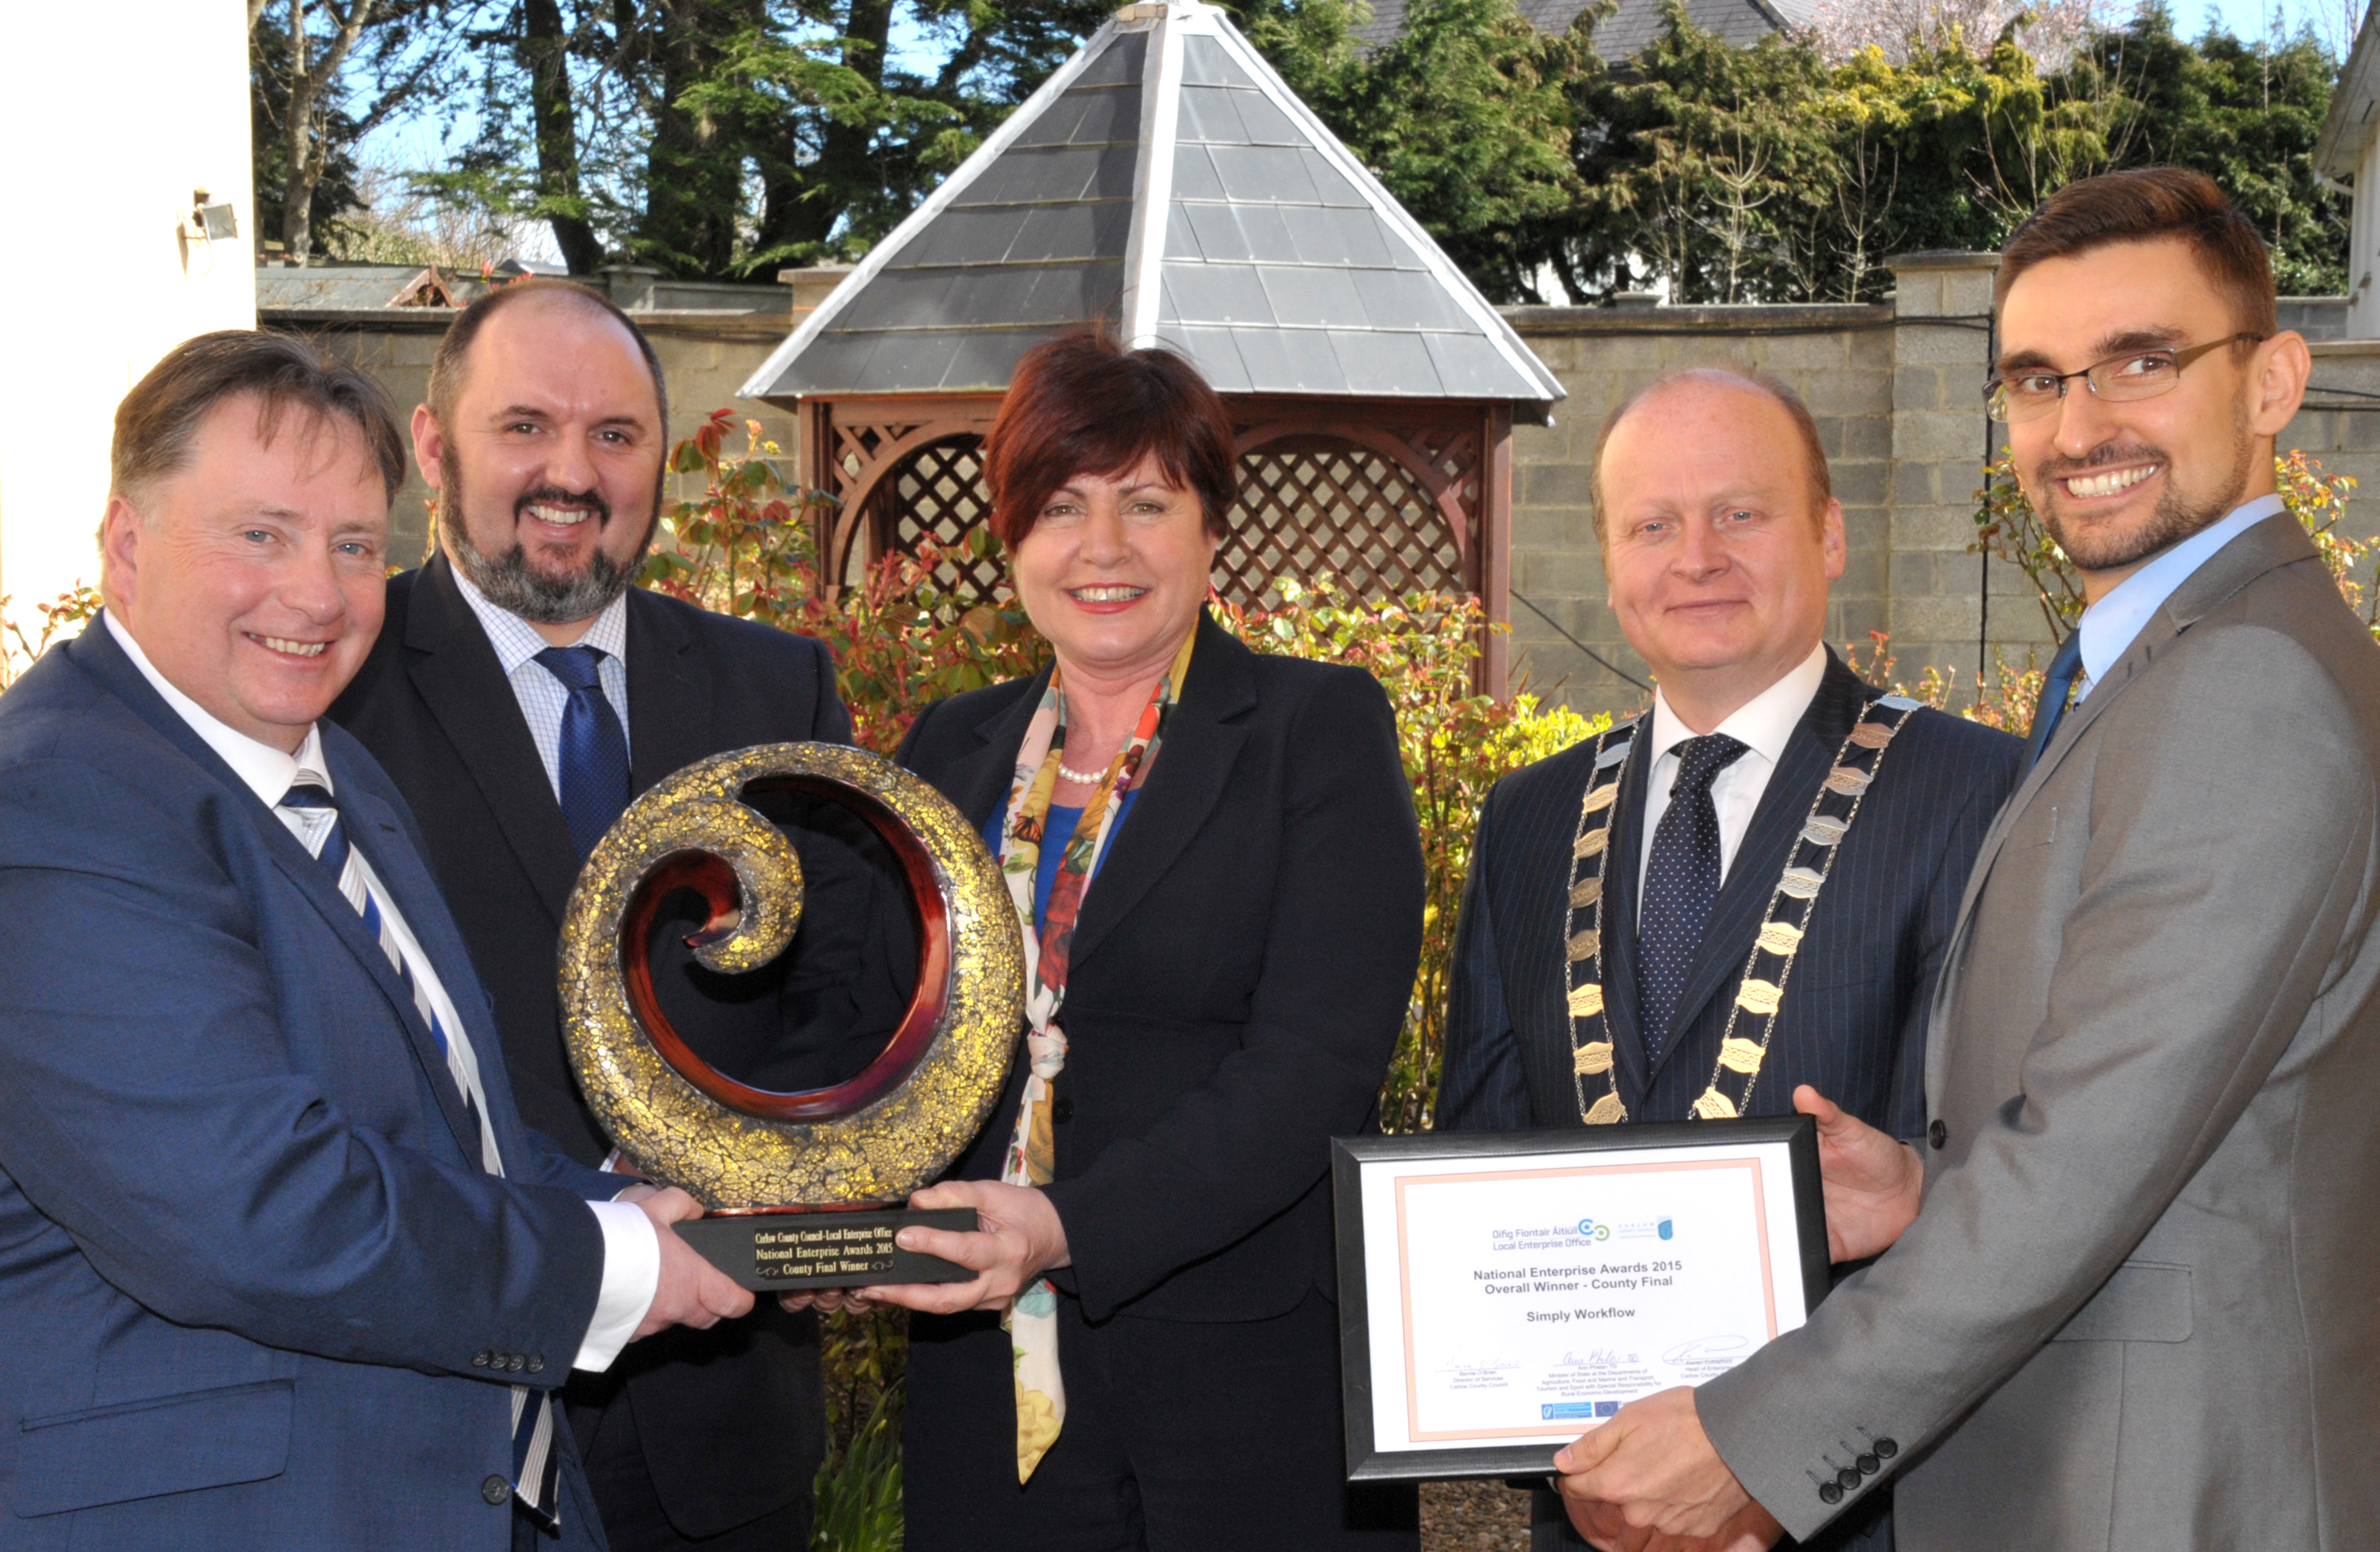 Council announces ‘Final Five’ for County Final of National Enterprise Awards 2016